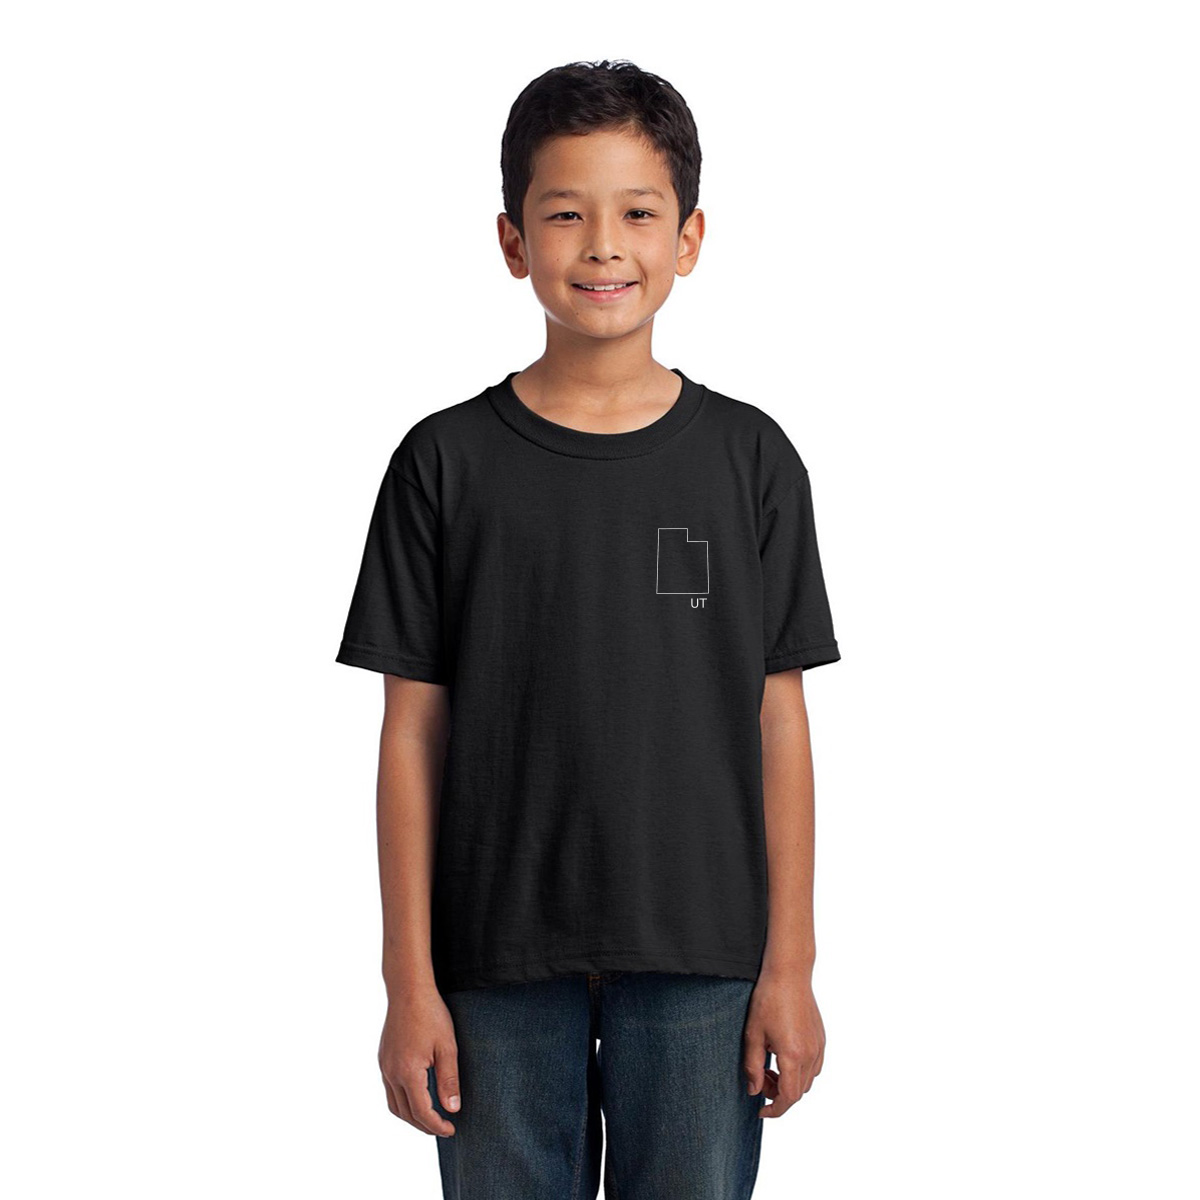 Utah Kids T-shirt | Black